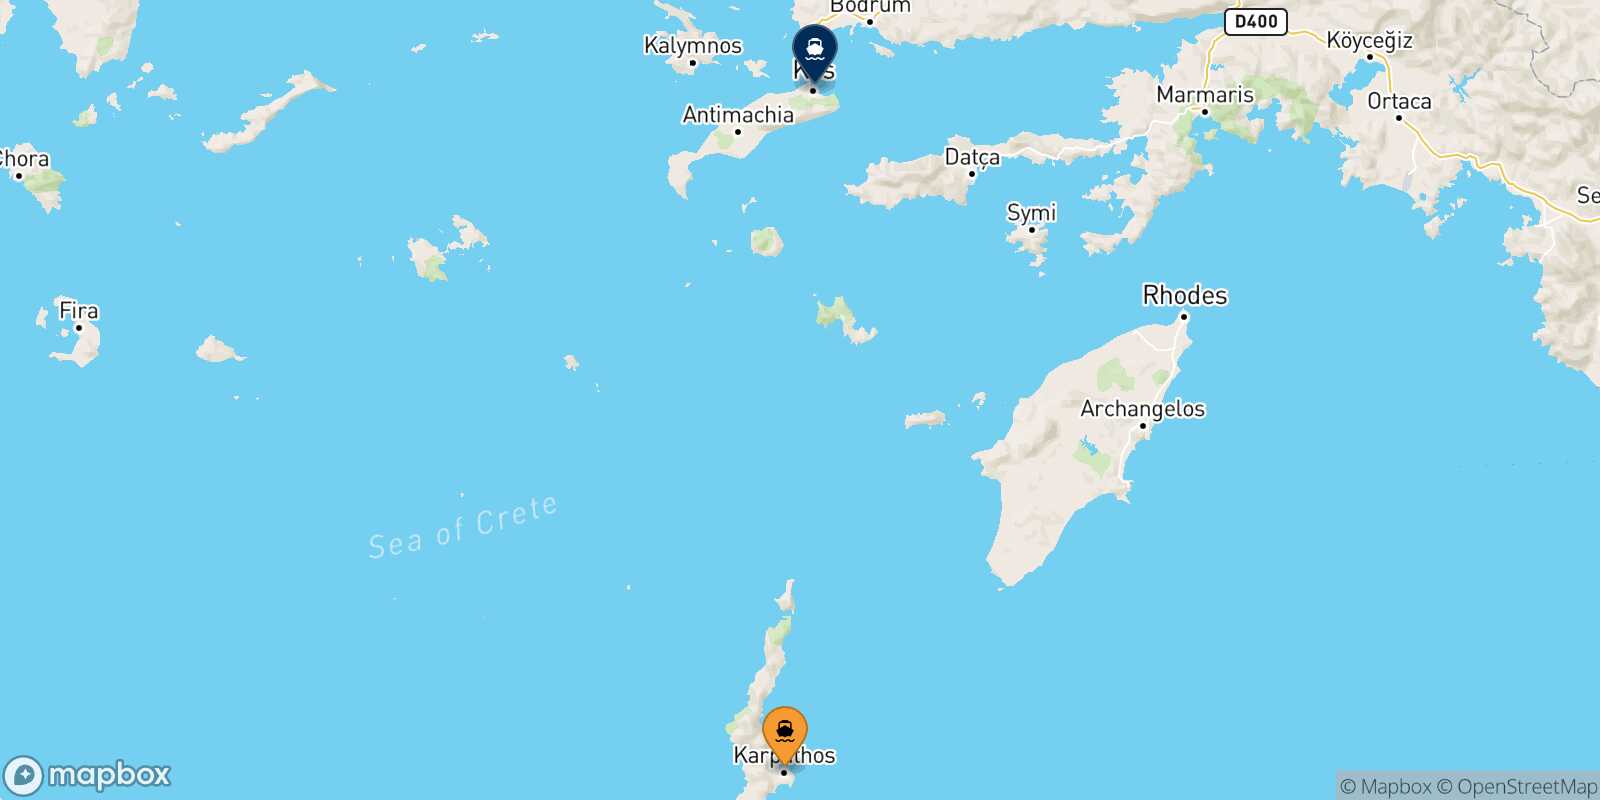 Karpathos Kos route map